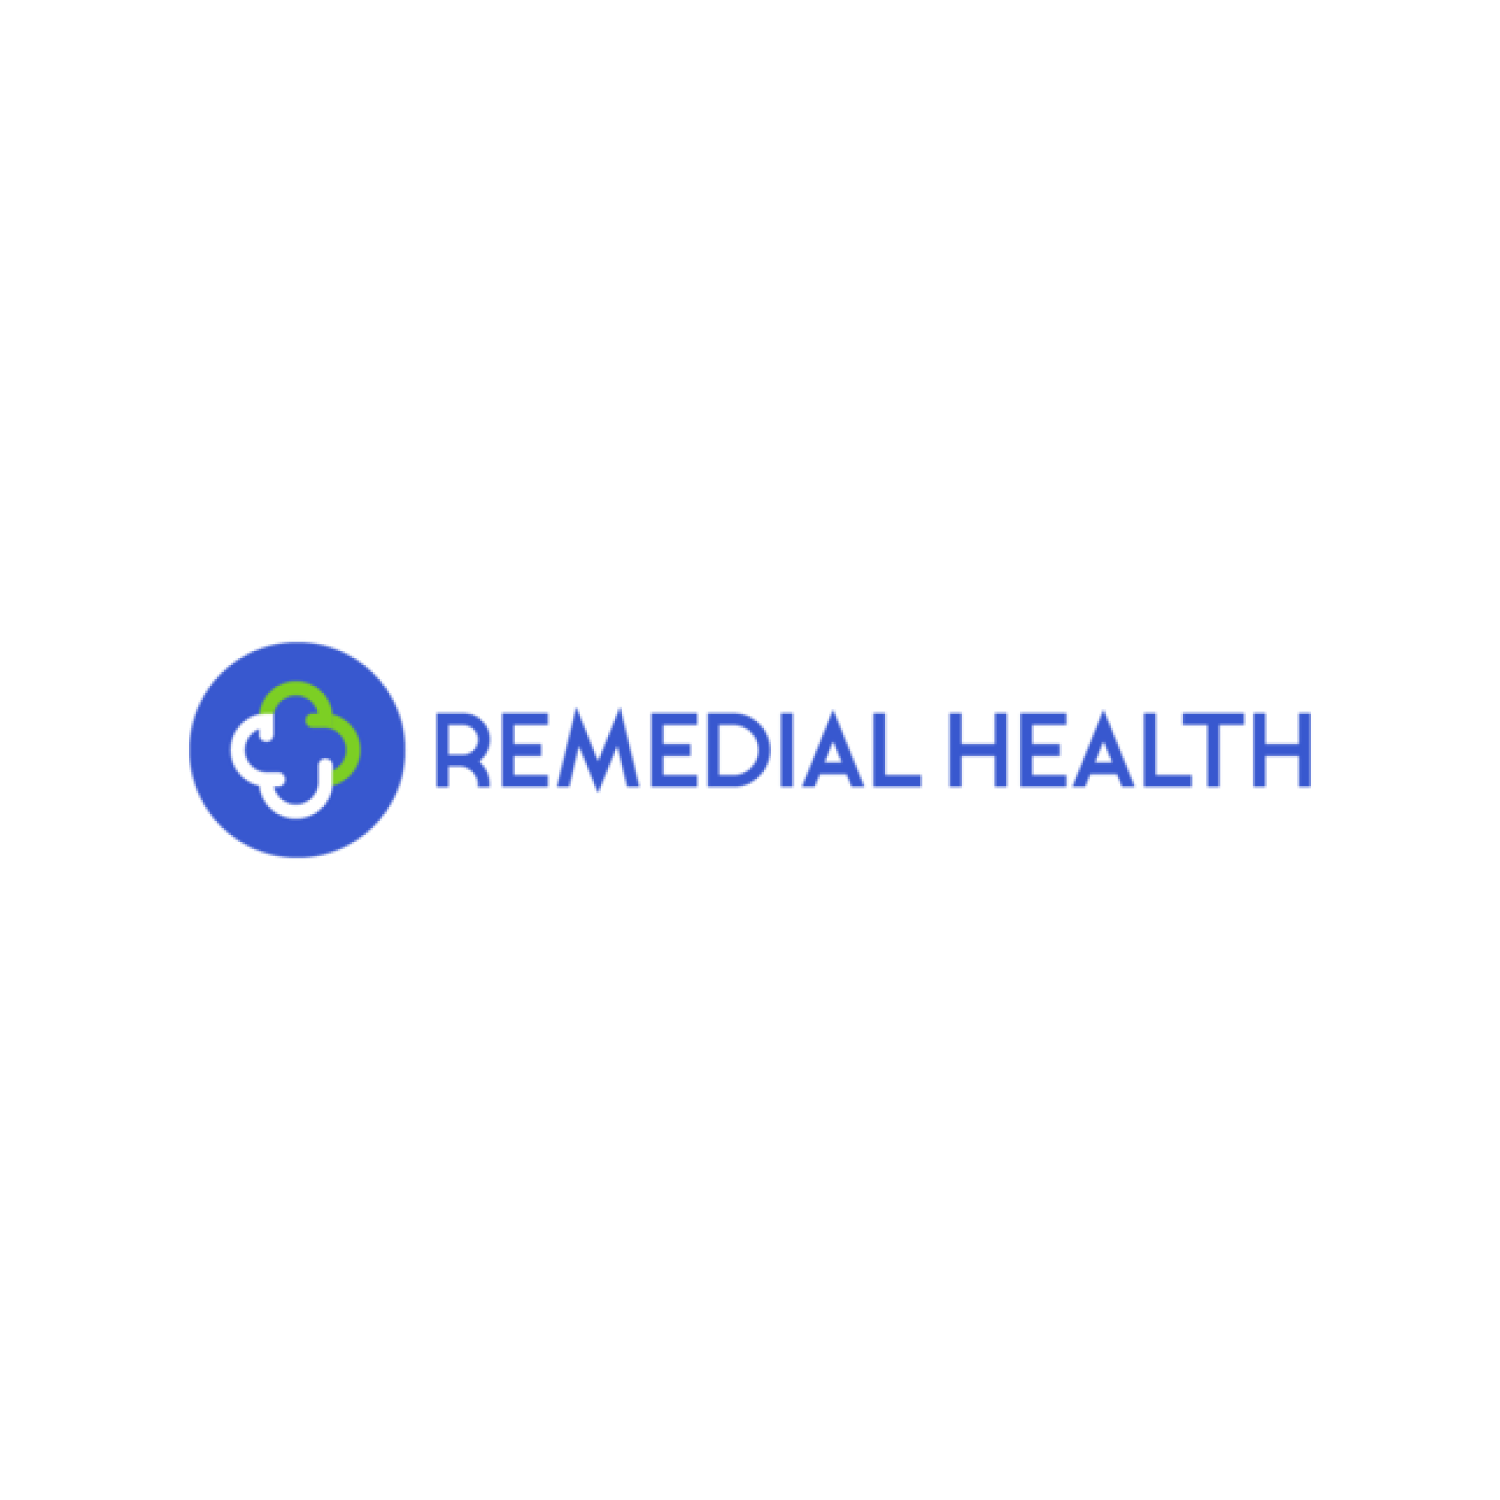 Remedial health